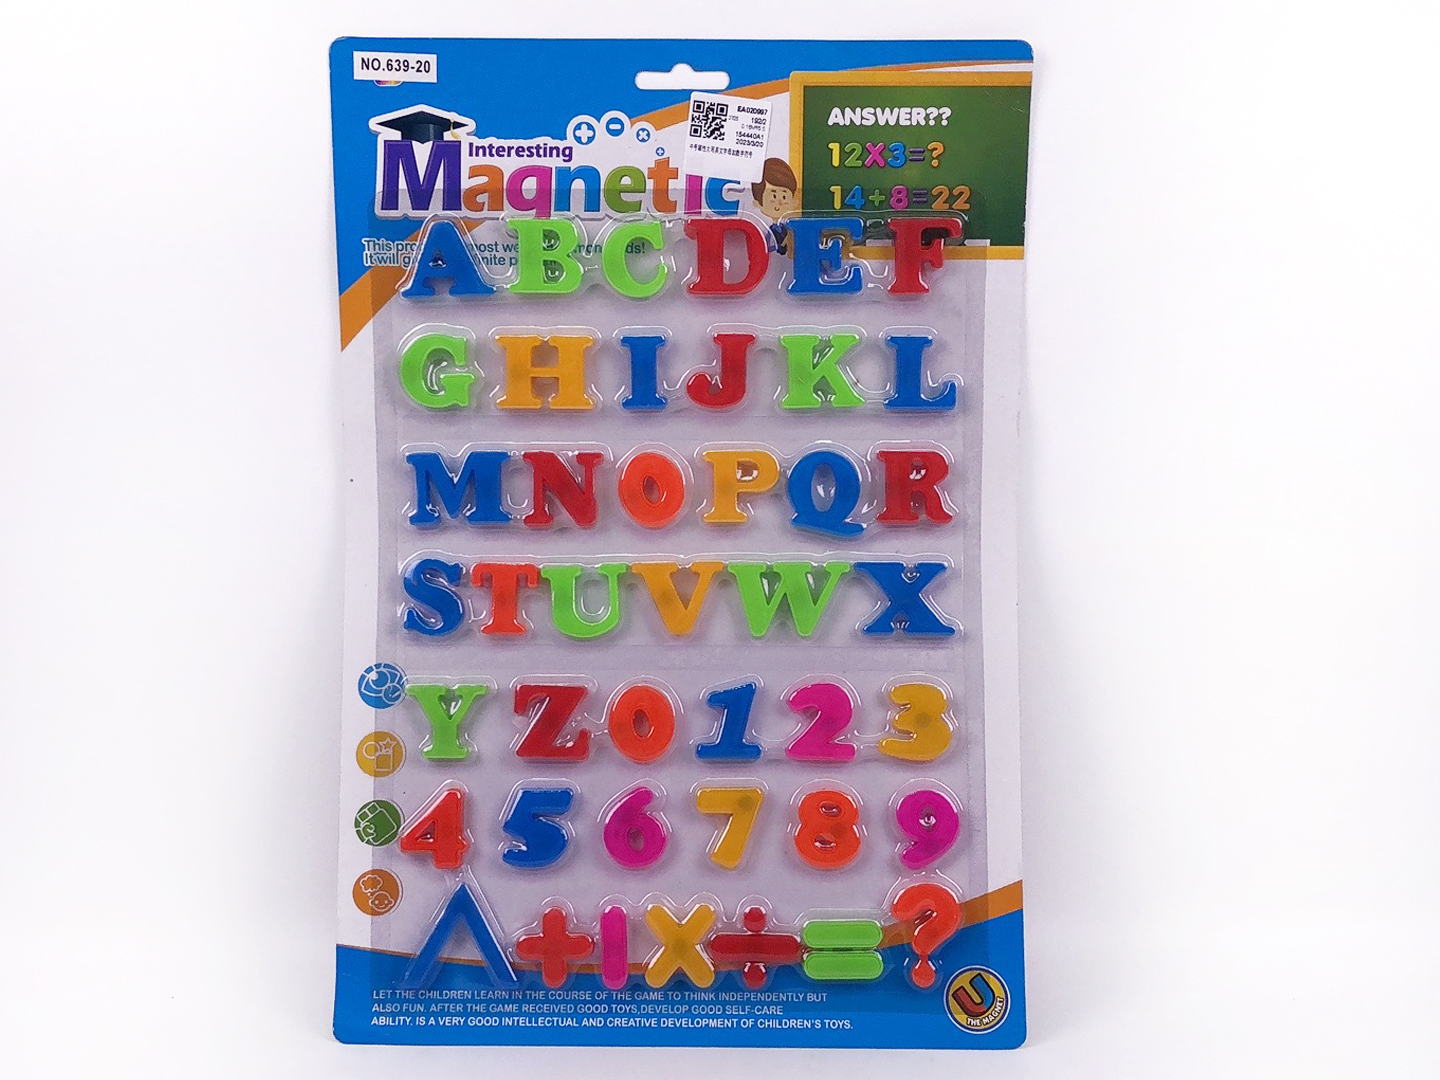 Magnetic English Letters & Numeric Symbols toys